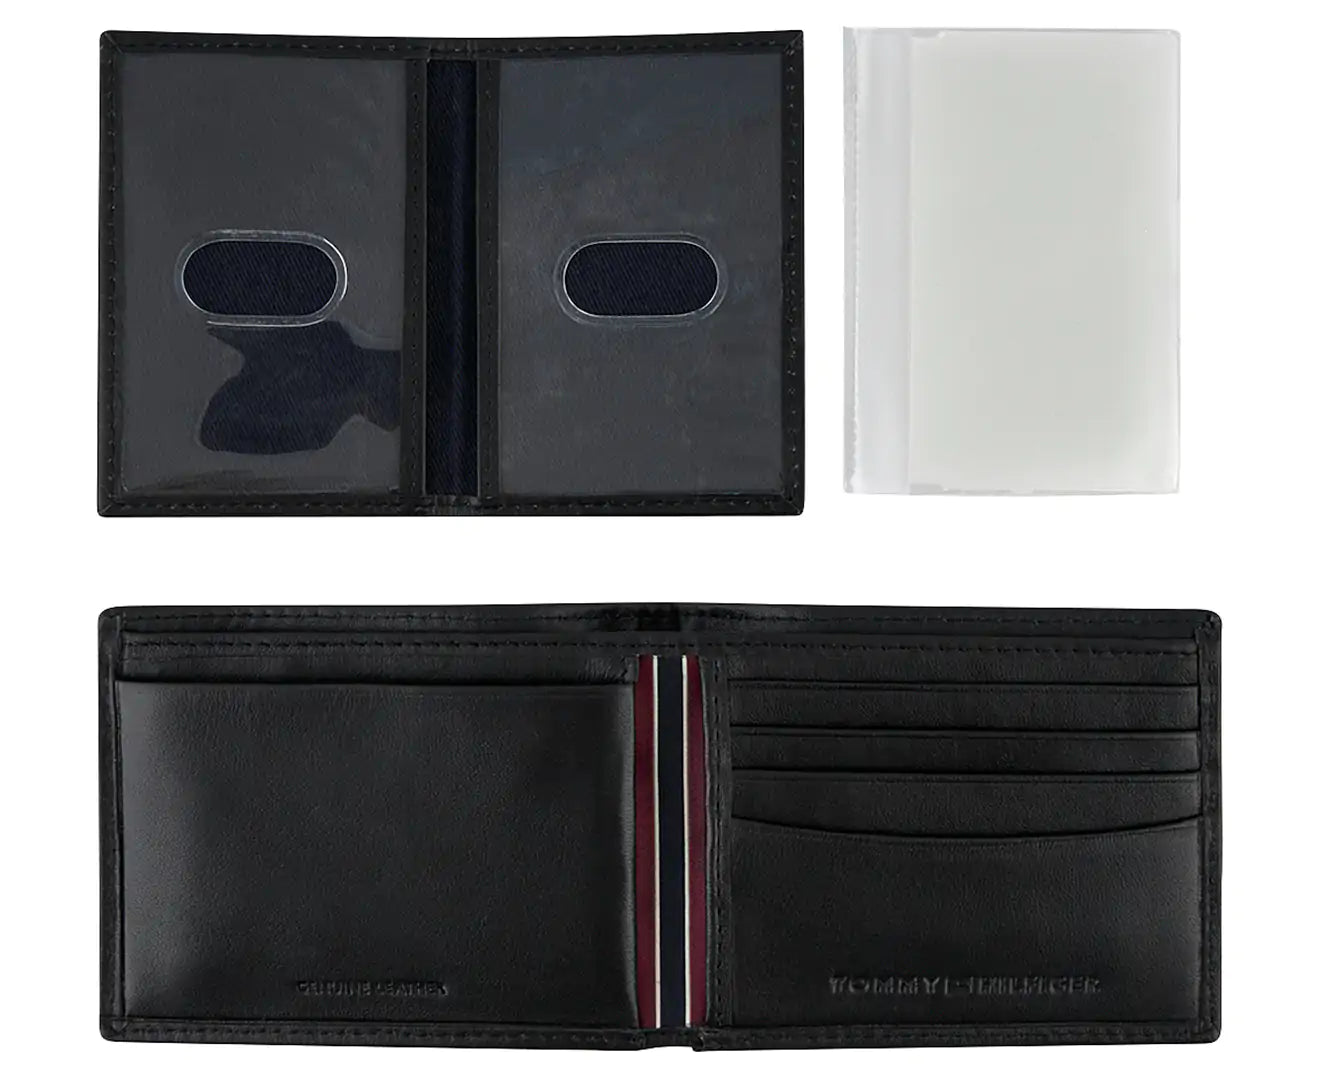 Tommy Hilfiger Men's Wallet Leather Passcase Stockton Billfold - Black